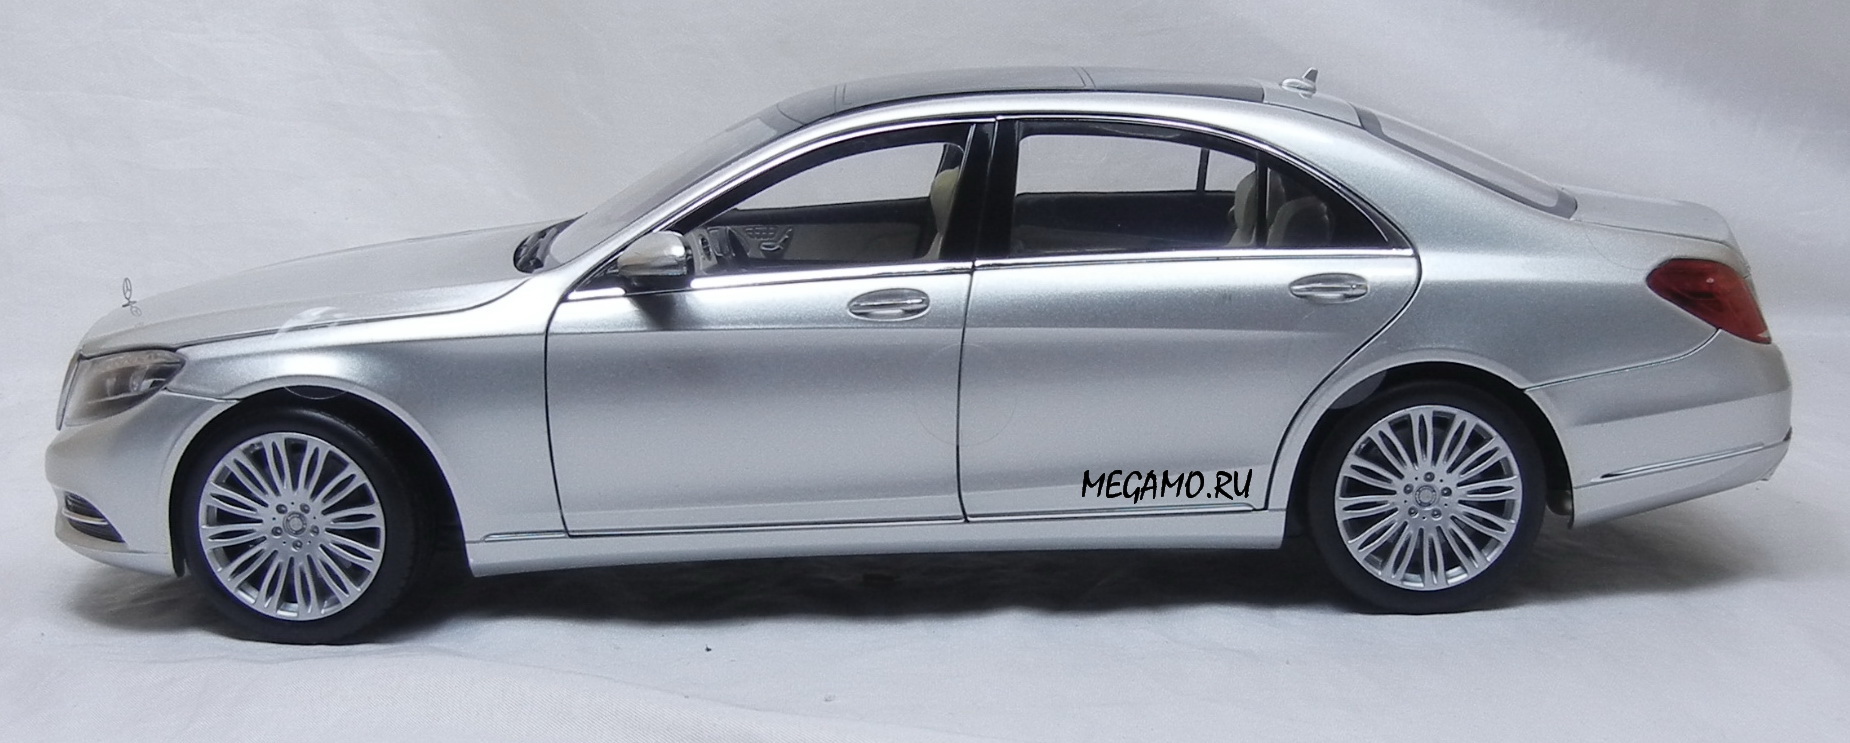 1/18 Norev Mercedes S-Class 2013 w222 silver metallic